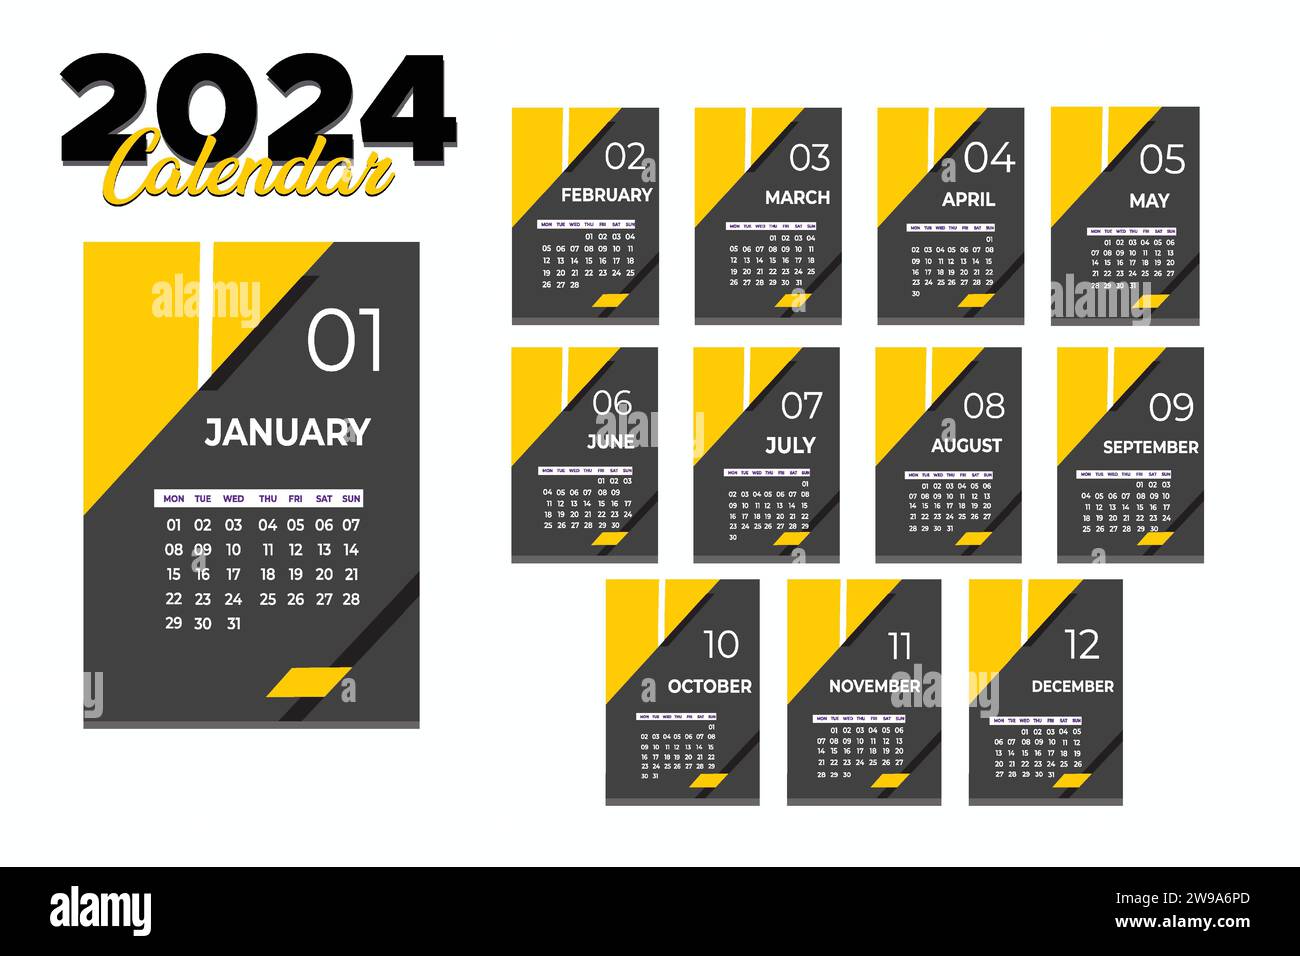 Calendars 2024 Modern Layout Vector Illustration. Week starts on Monday